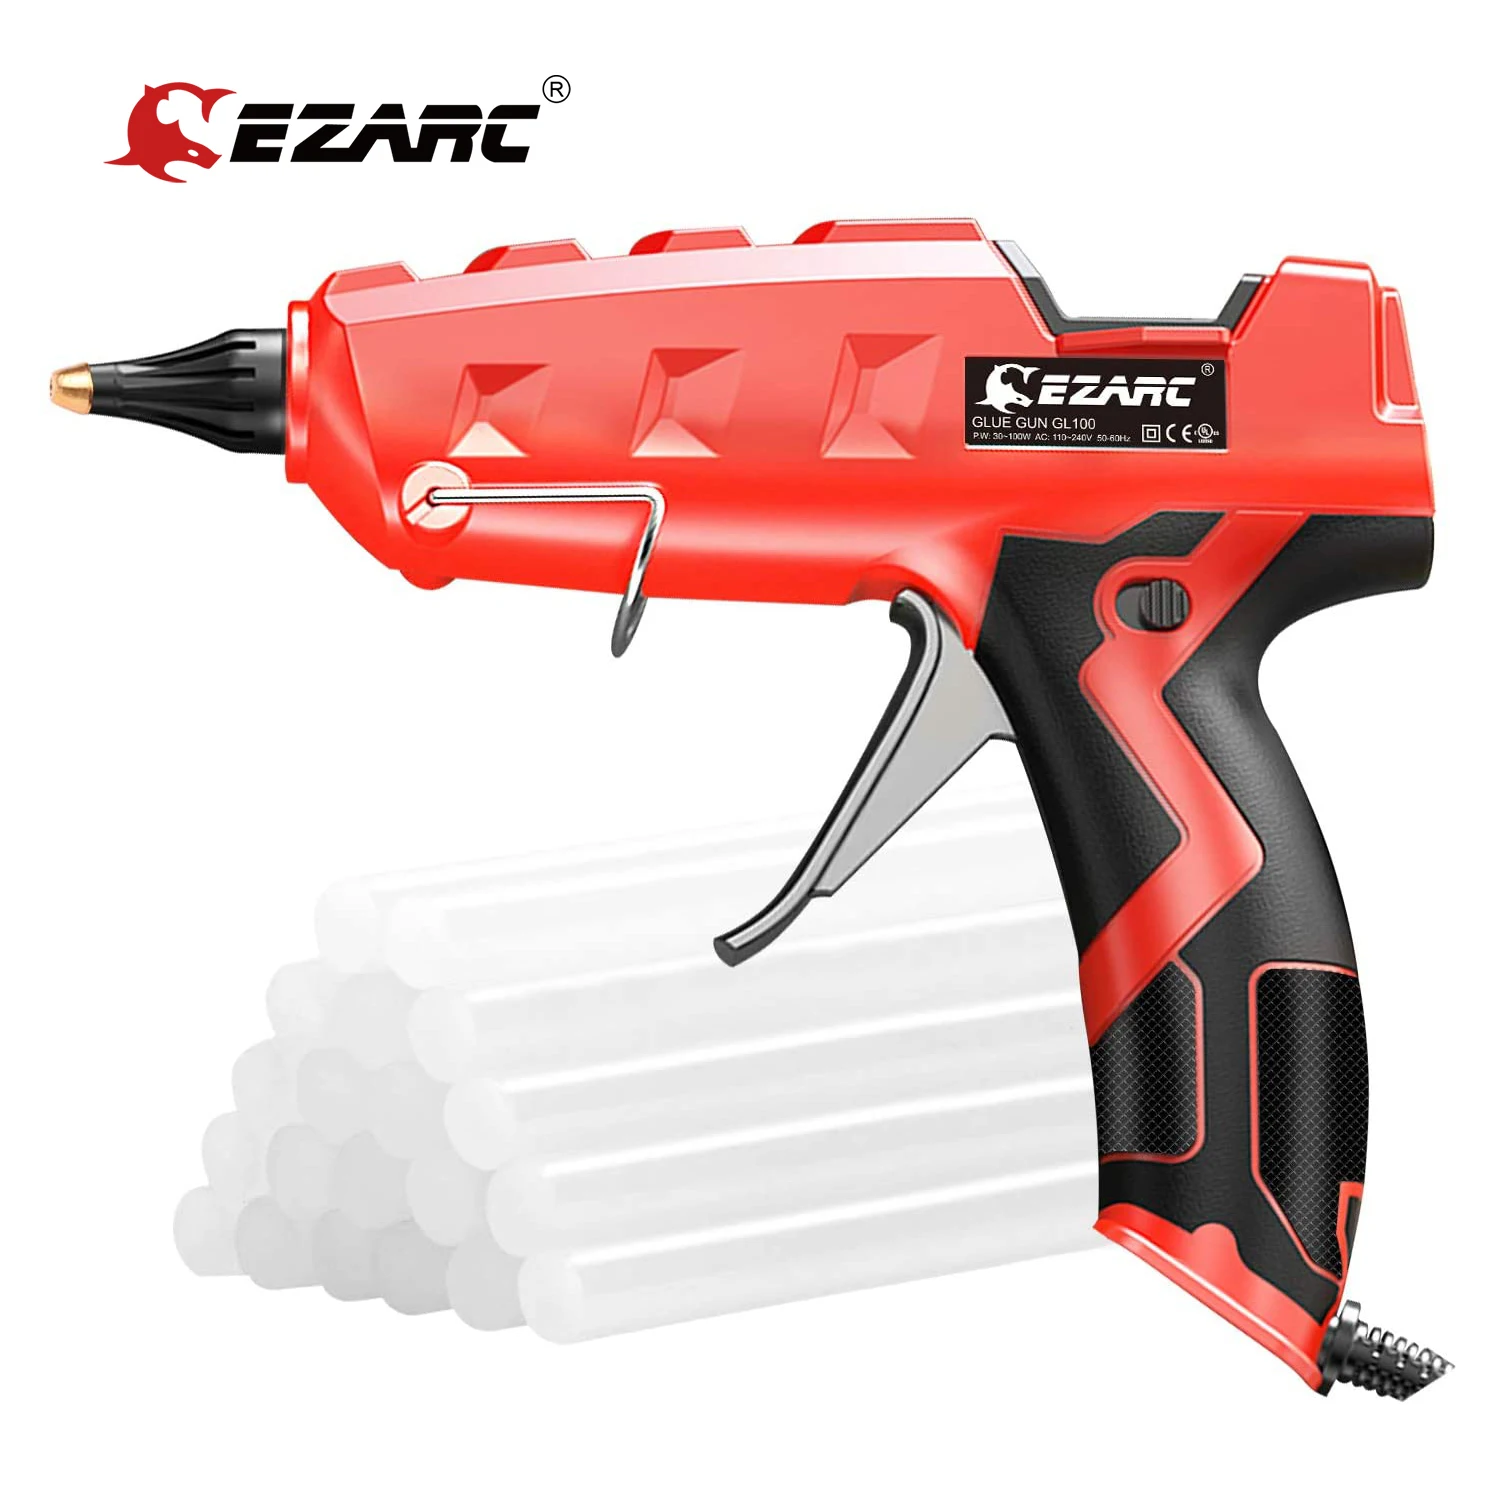 EZARC Hot Melt Glue Gun 100W Heavy Duty Full Size Glue Gun Kit with 20pcs Glue Sticks, for DIY, Arts & Crafts Projects, Sealing